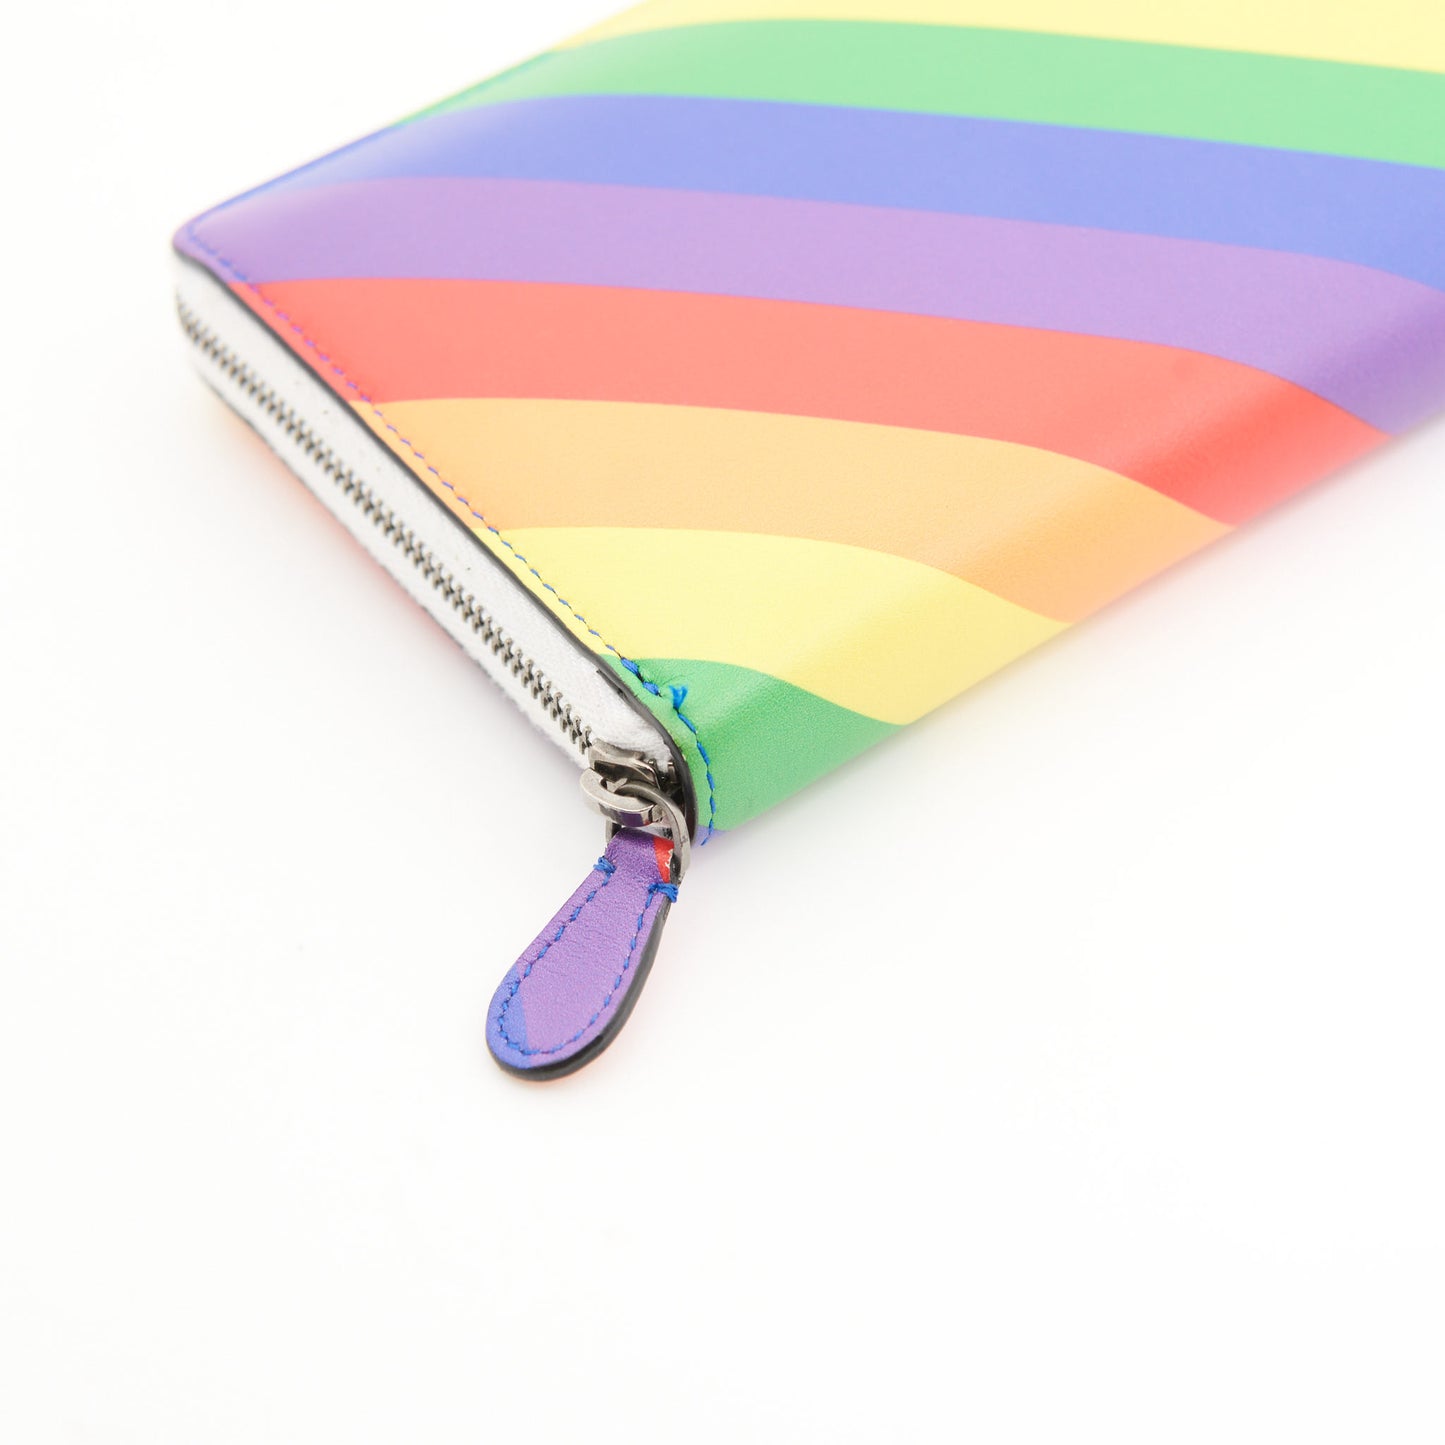 Balenciaga Leather Ville Zip Wallet in Rainbow